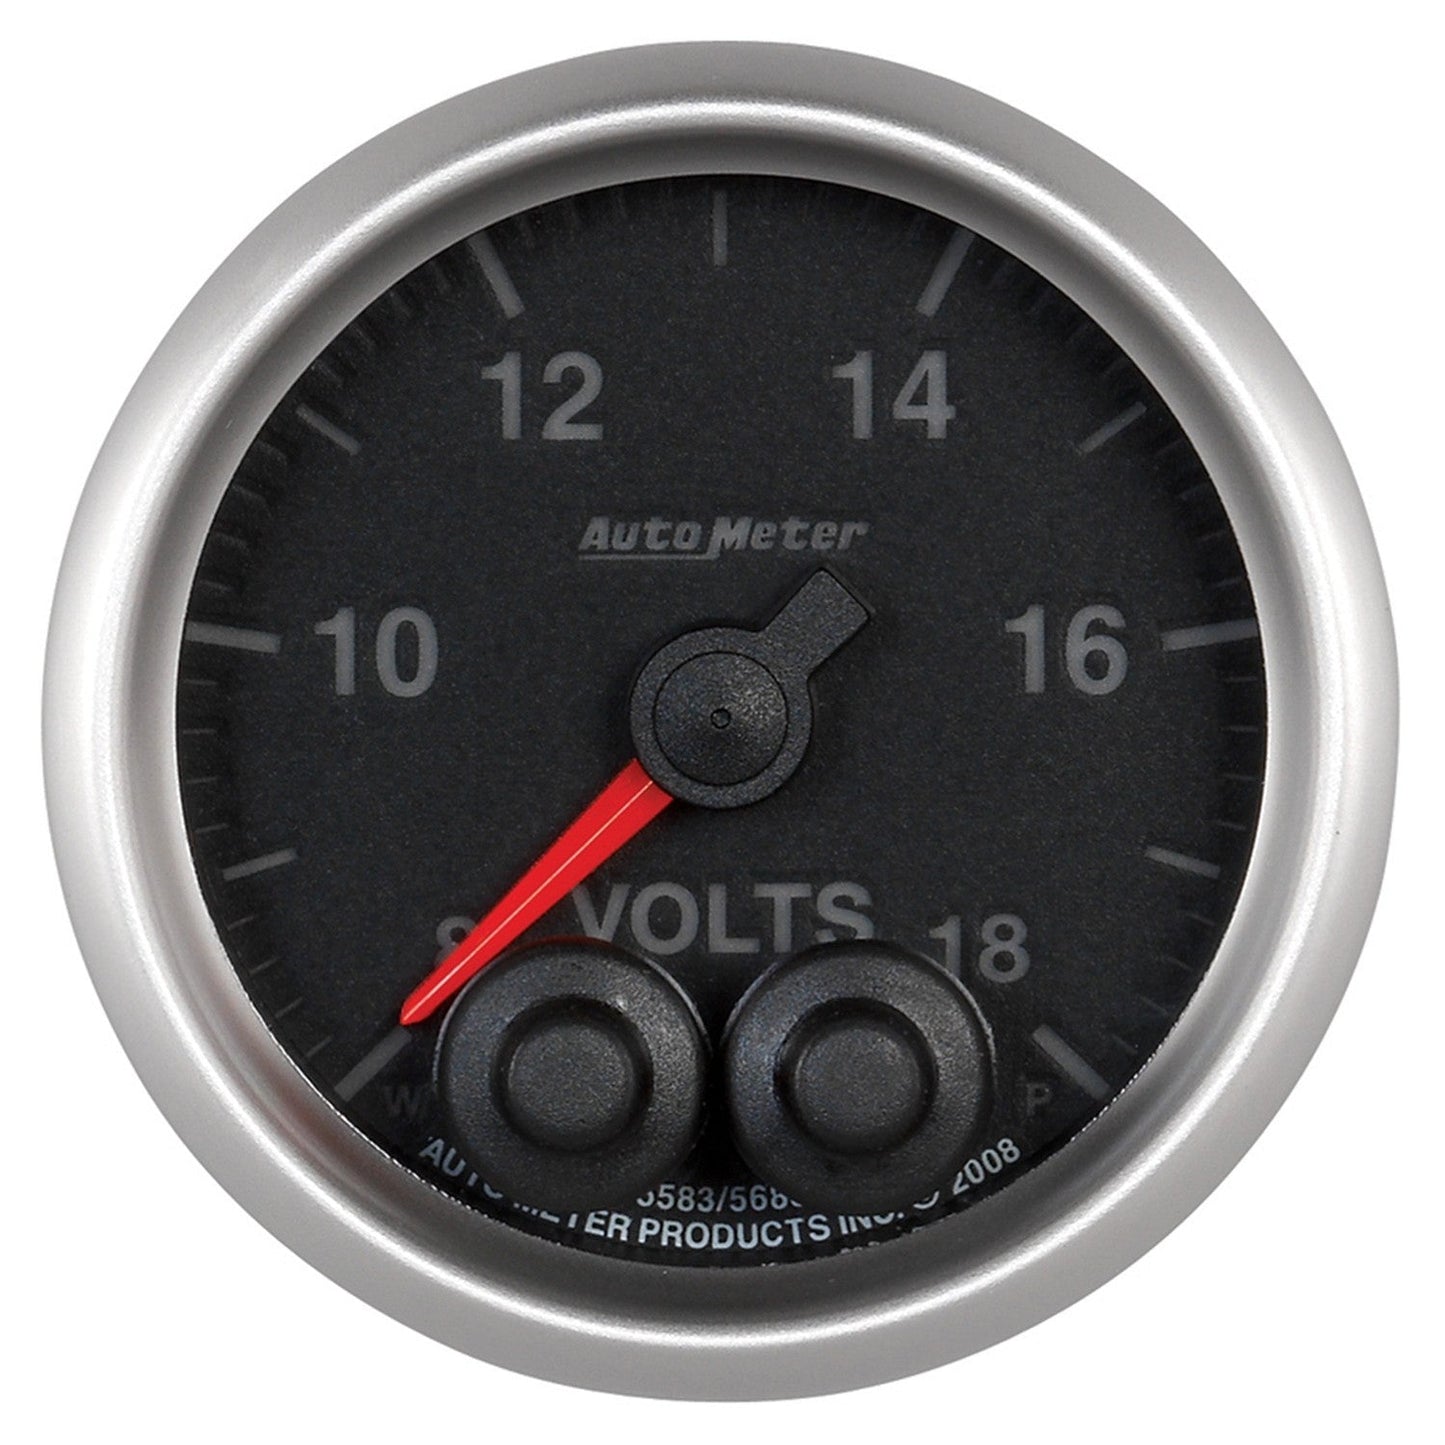 AutoMeter - VOLTÍMETRO DE 2-1/16", 8-18 V, MOTOR PASO A PASO DIGITAL, ELITE (5683)